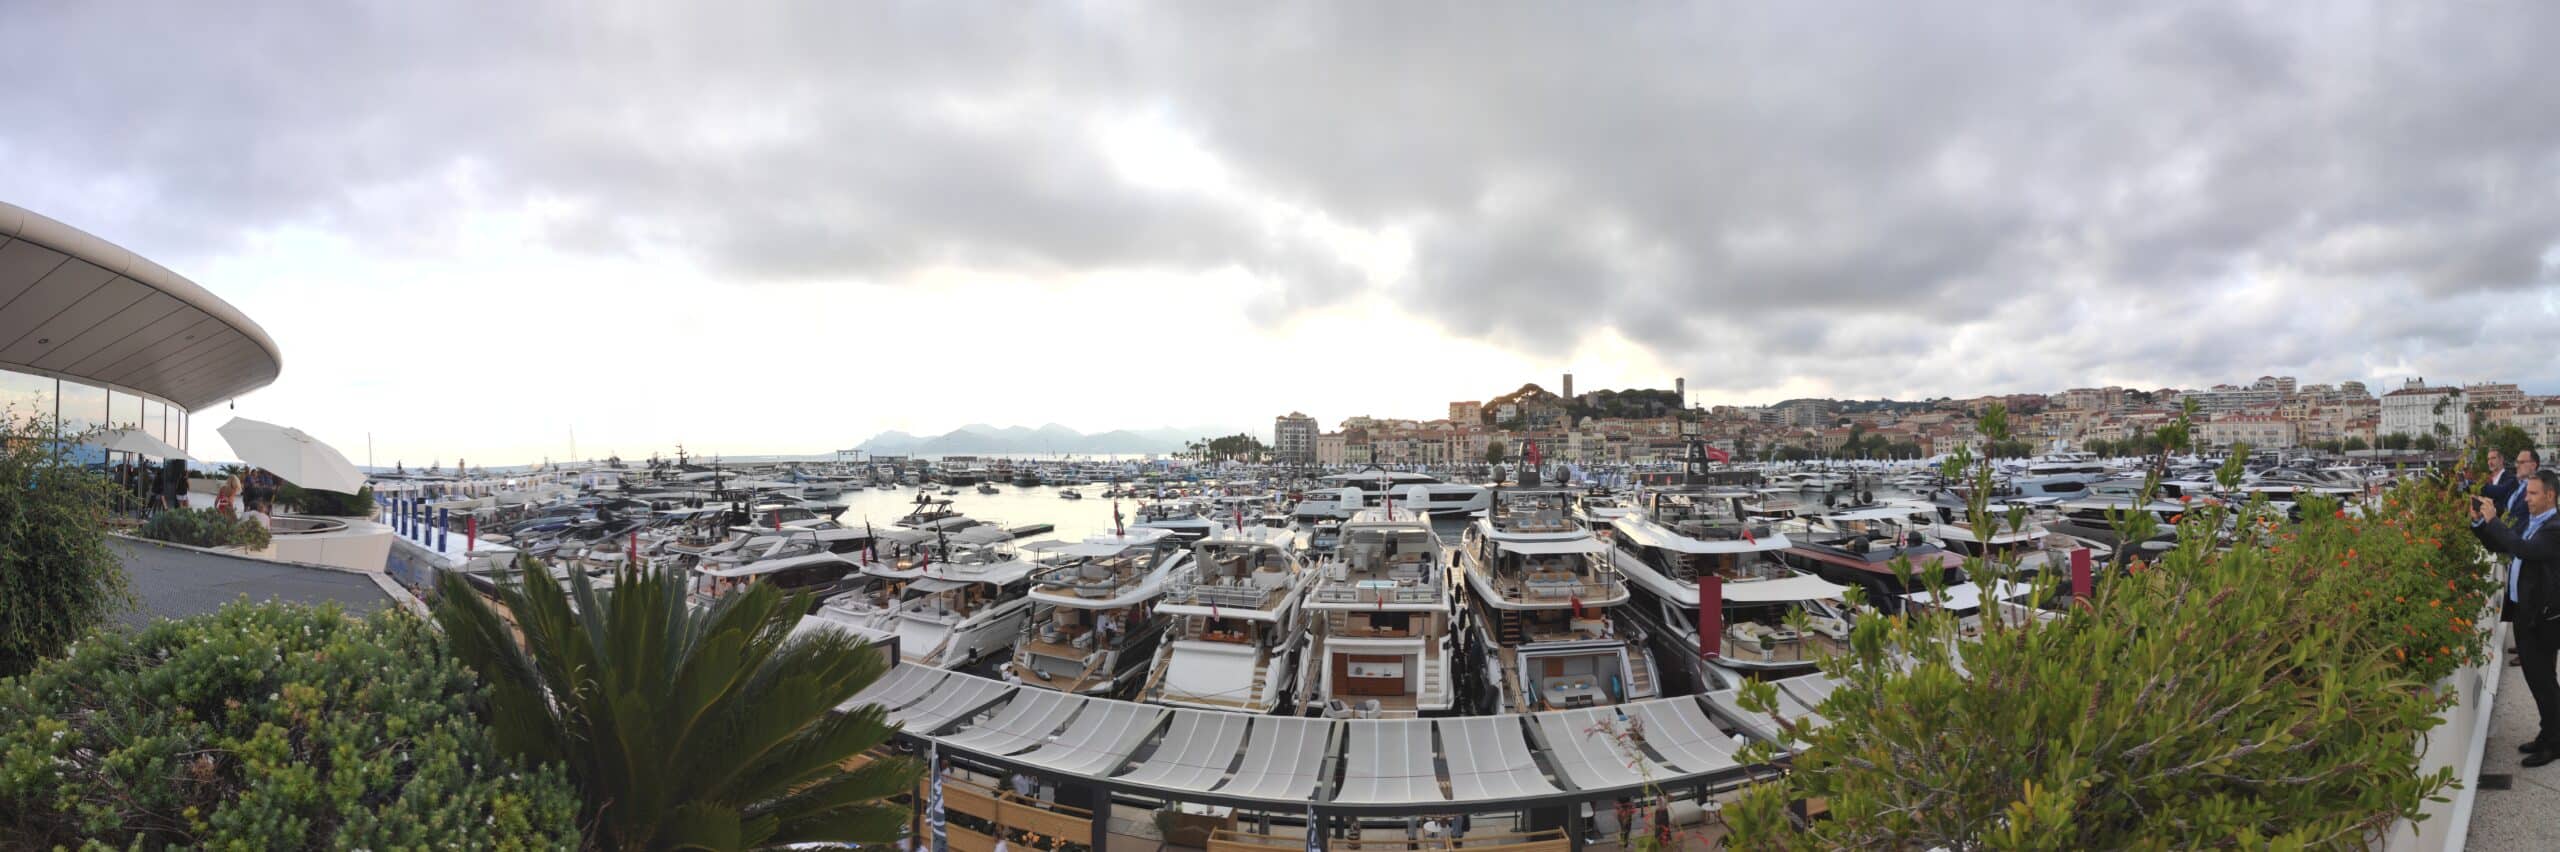 Panoramique des supers yachts au cannes yachting festival